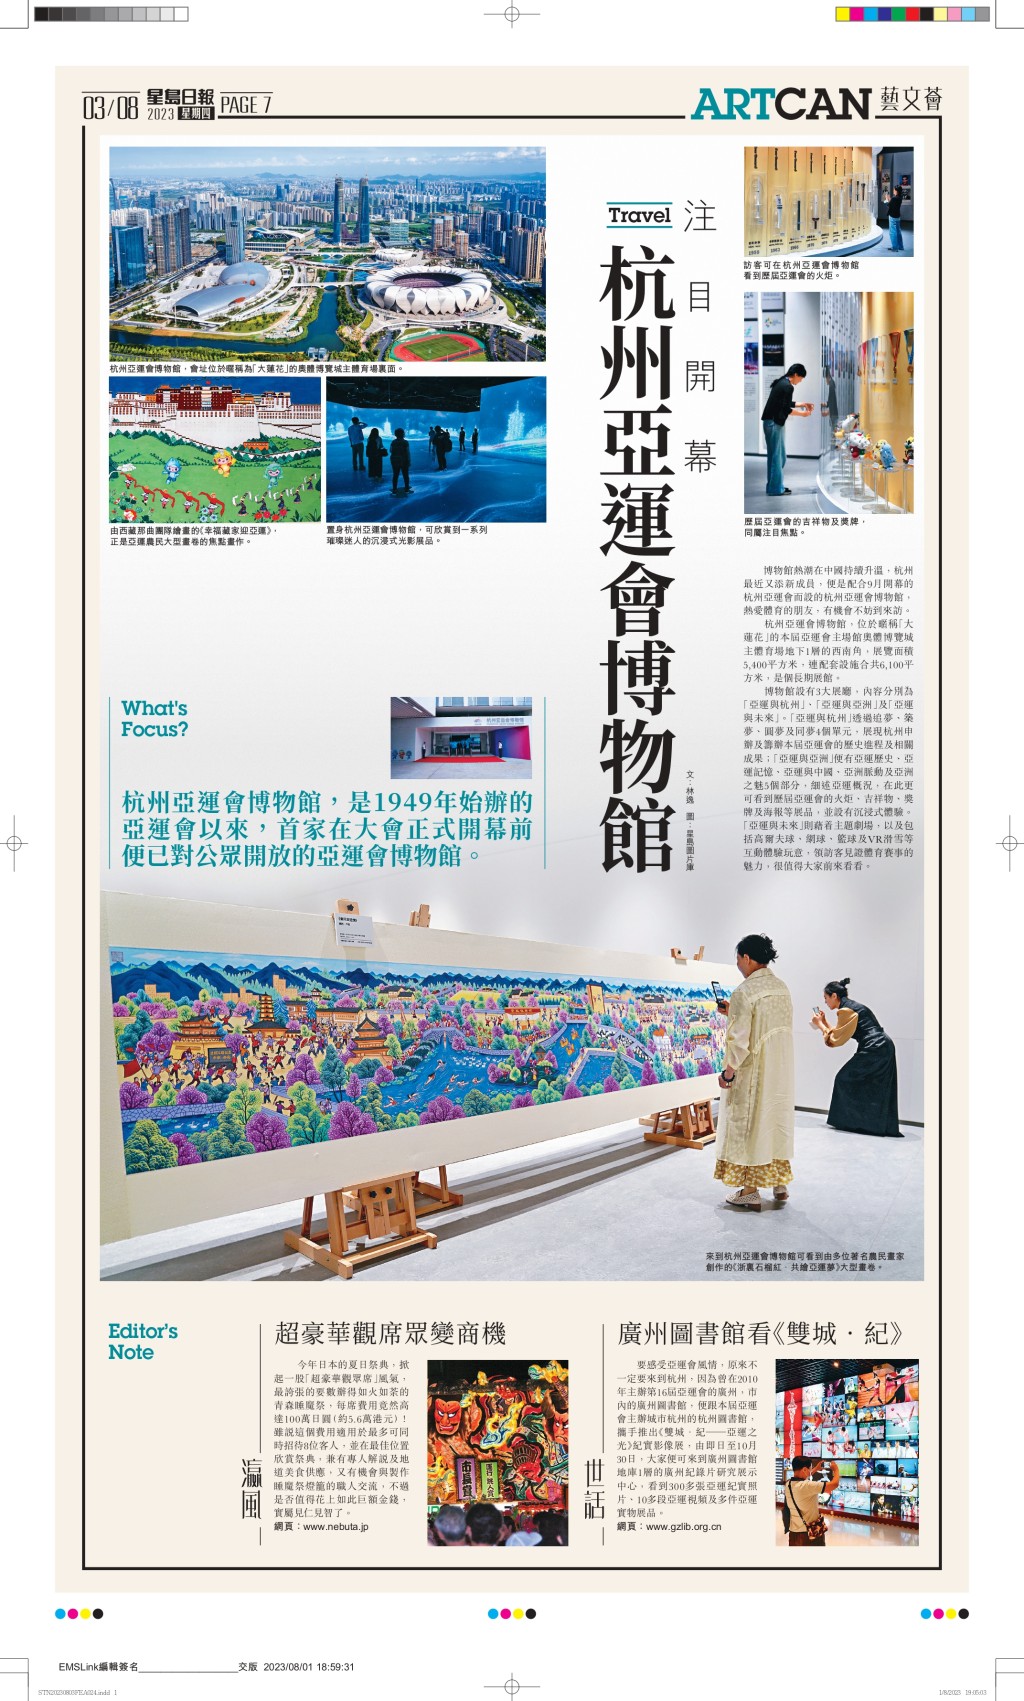 《ArtCan》8版内容冲出香港，介绍世界各地旅游景点、艺术博物馆及大型艺术展览、文化活动等等